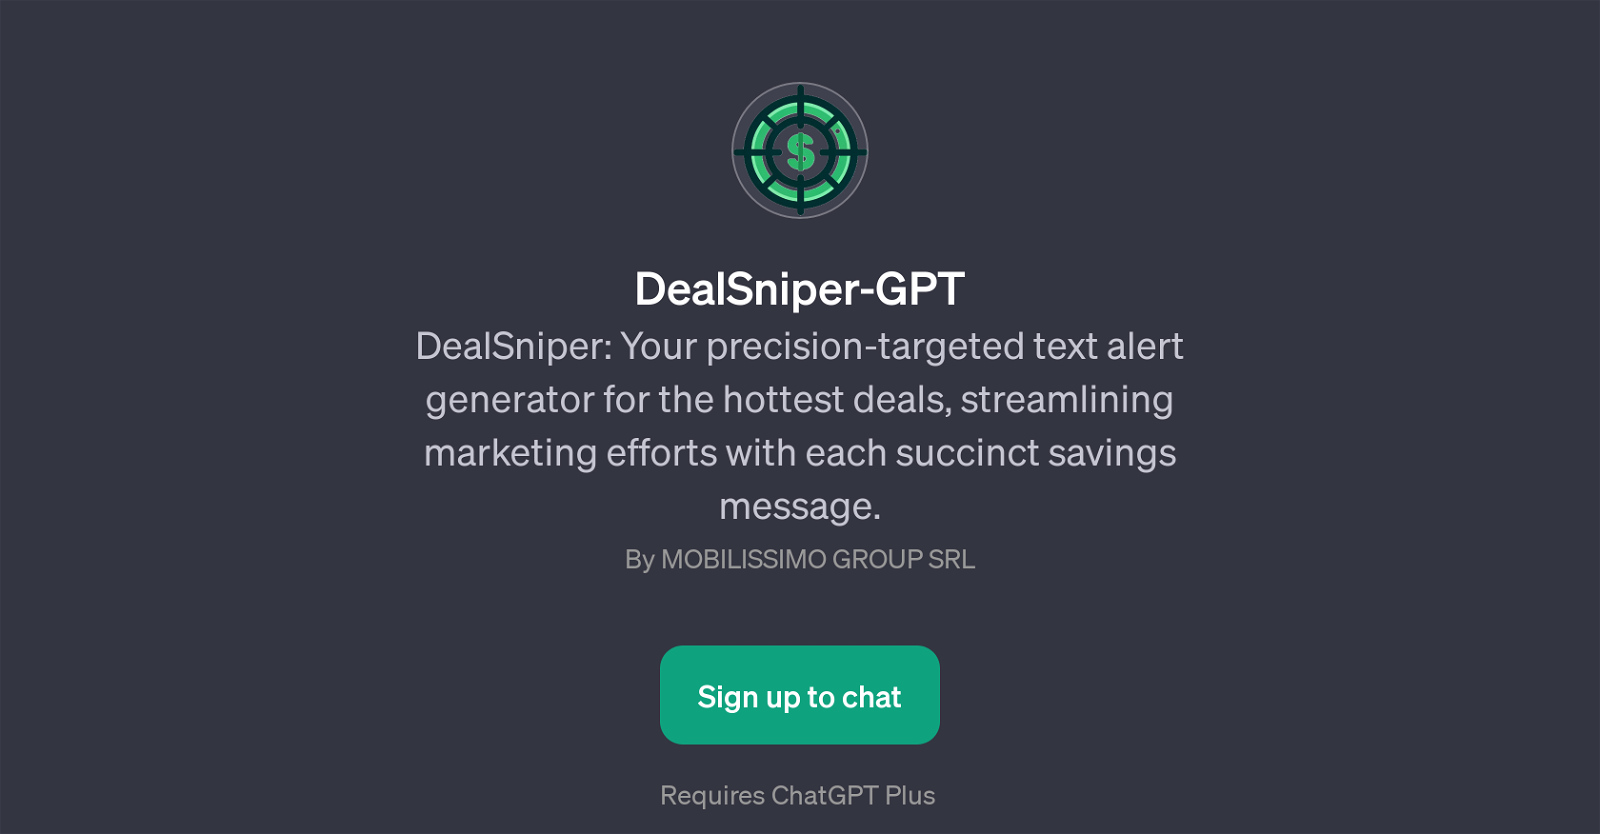 DealSniper-GPT website